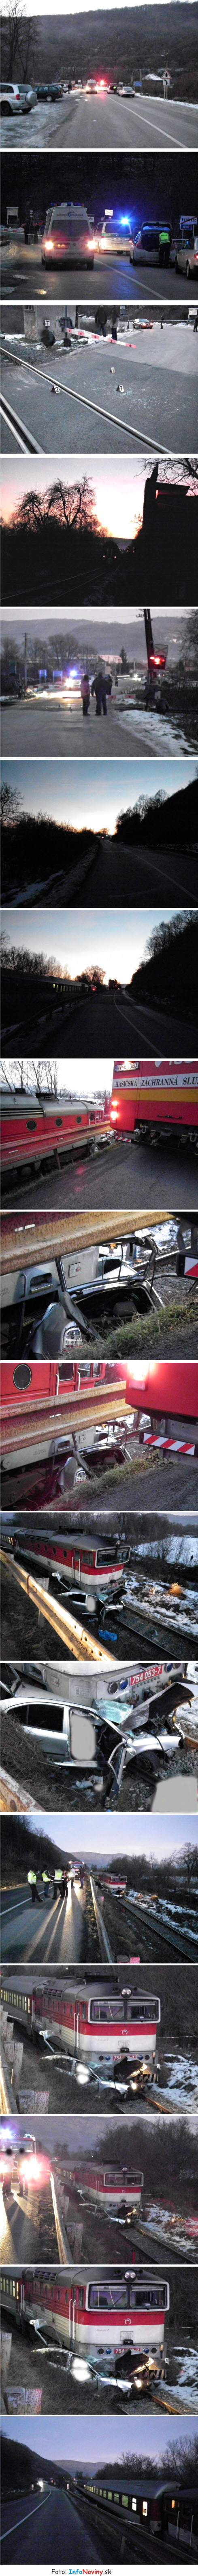 Pri zrážke vlaku a osobného auta zahynuli 2 osoby